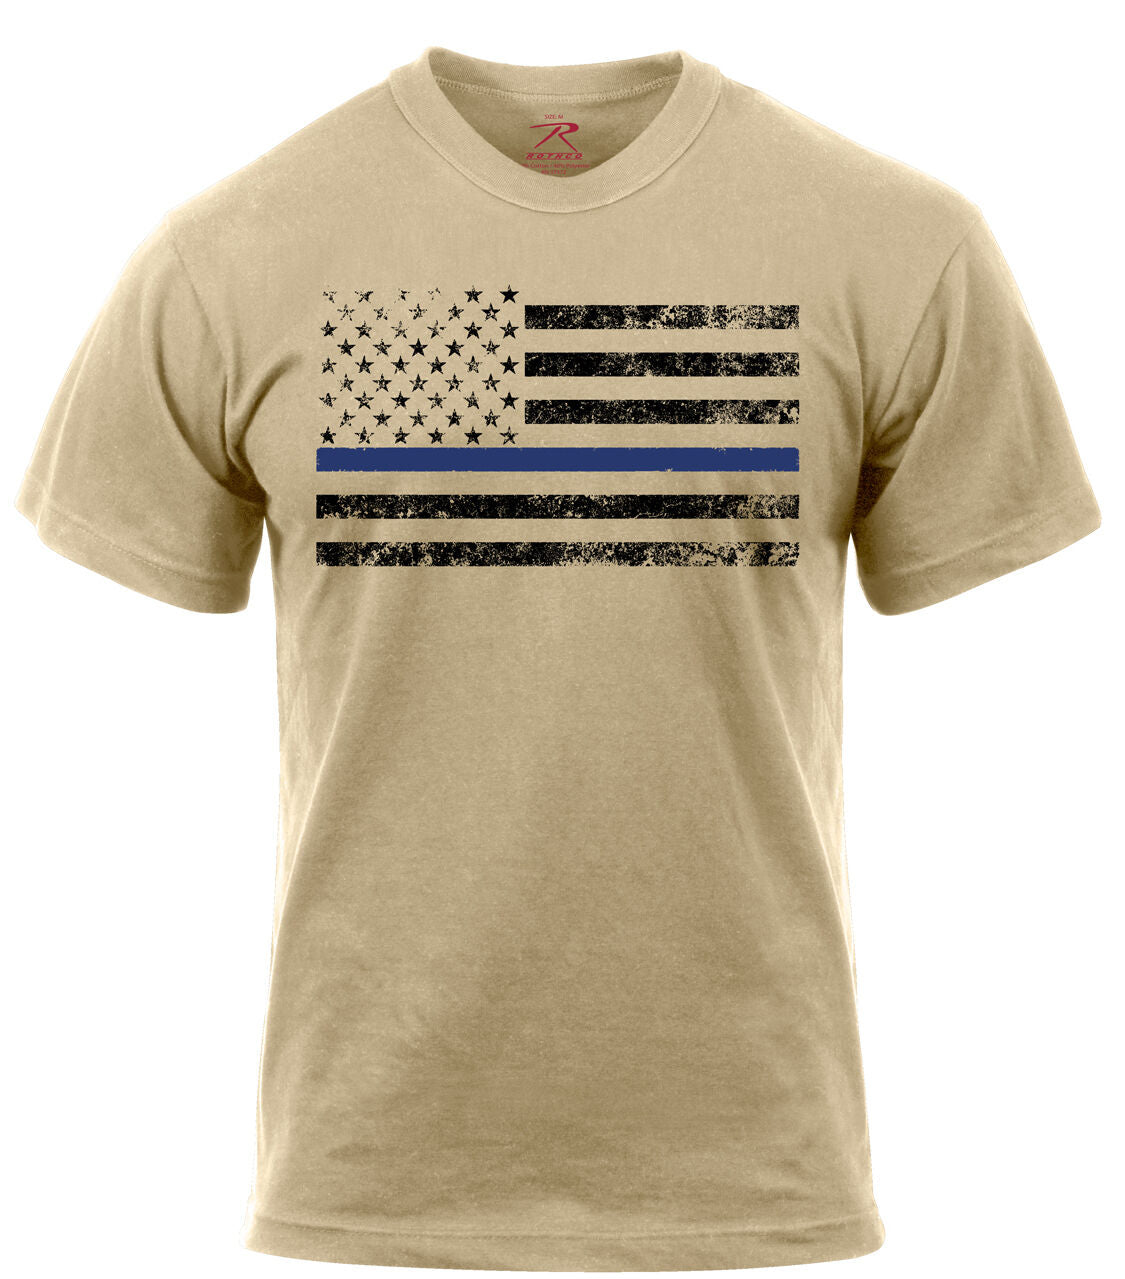 Rothco Thin Blue Line T-Shirt - Desert Sand